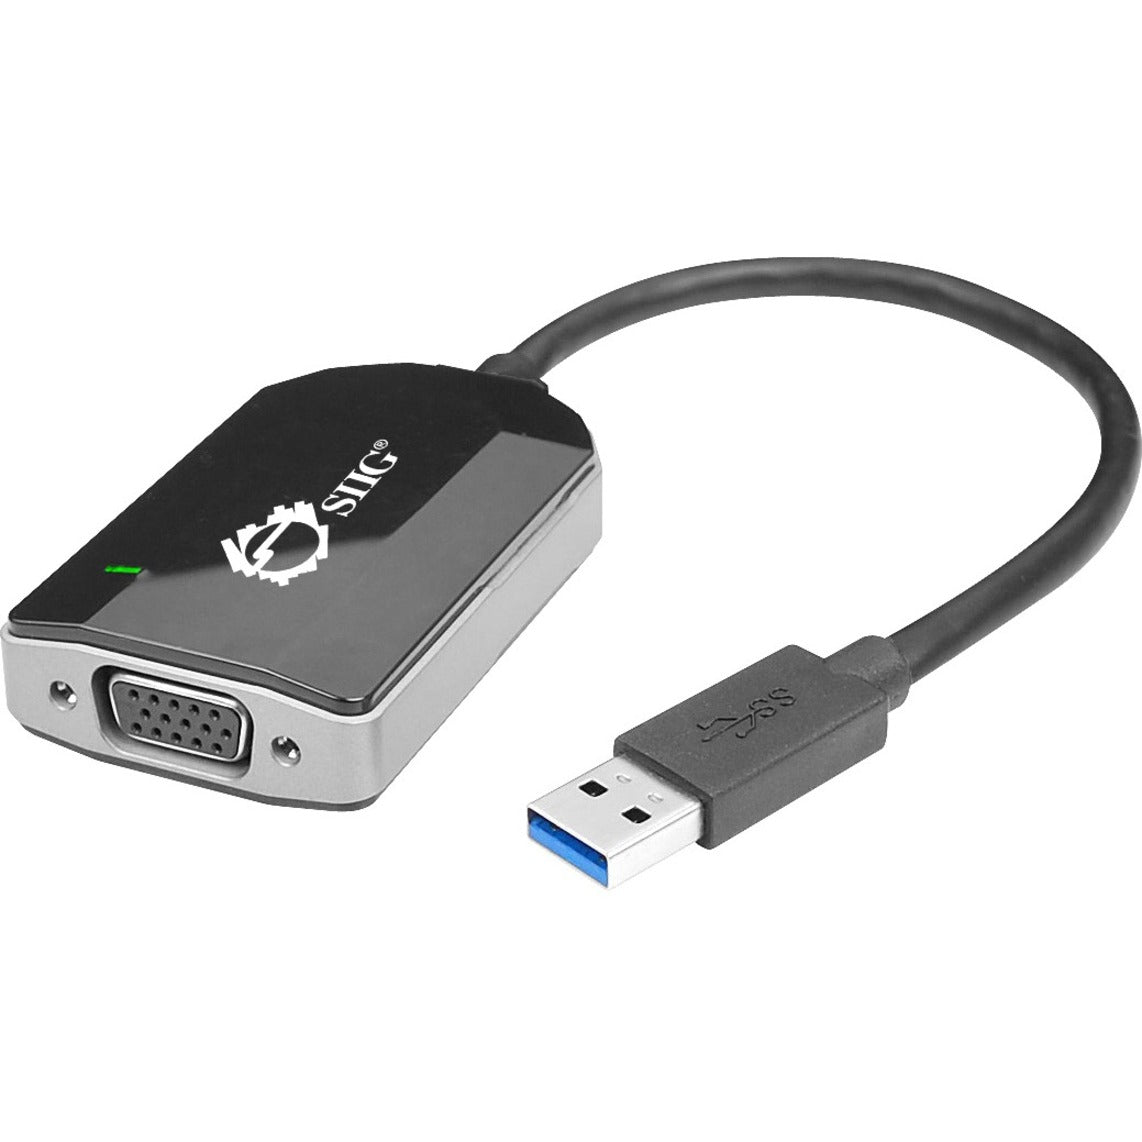 SIIG JU-VG0211-S1 USB 3.0 to VGA Multi Monitor Video Adapter, 2048 x 1152 Resolution, 5 Year Warranty